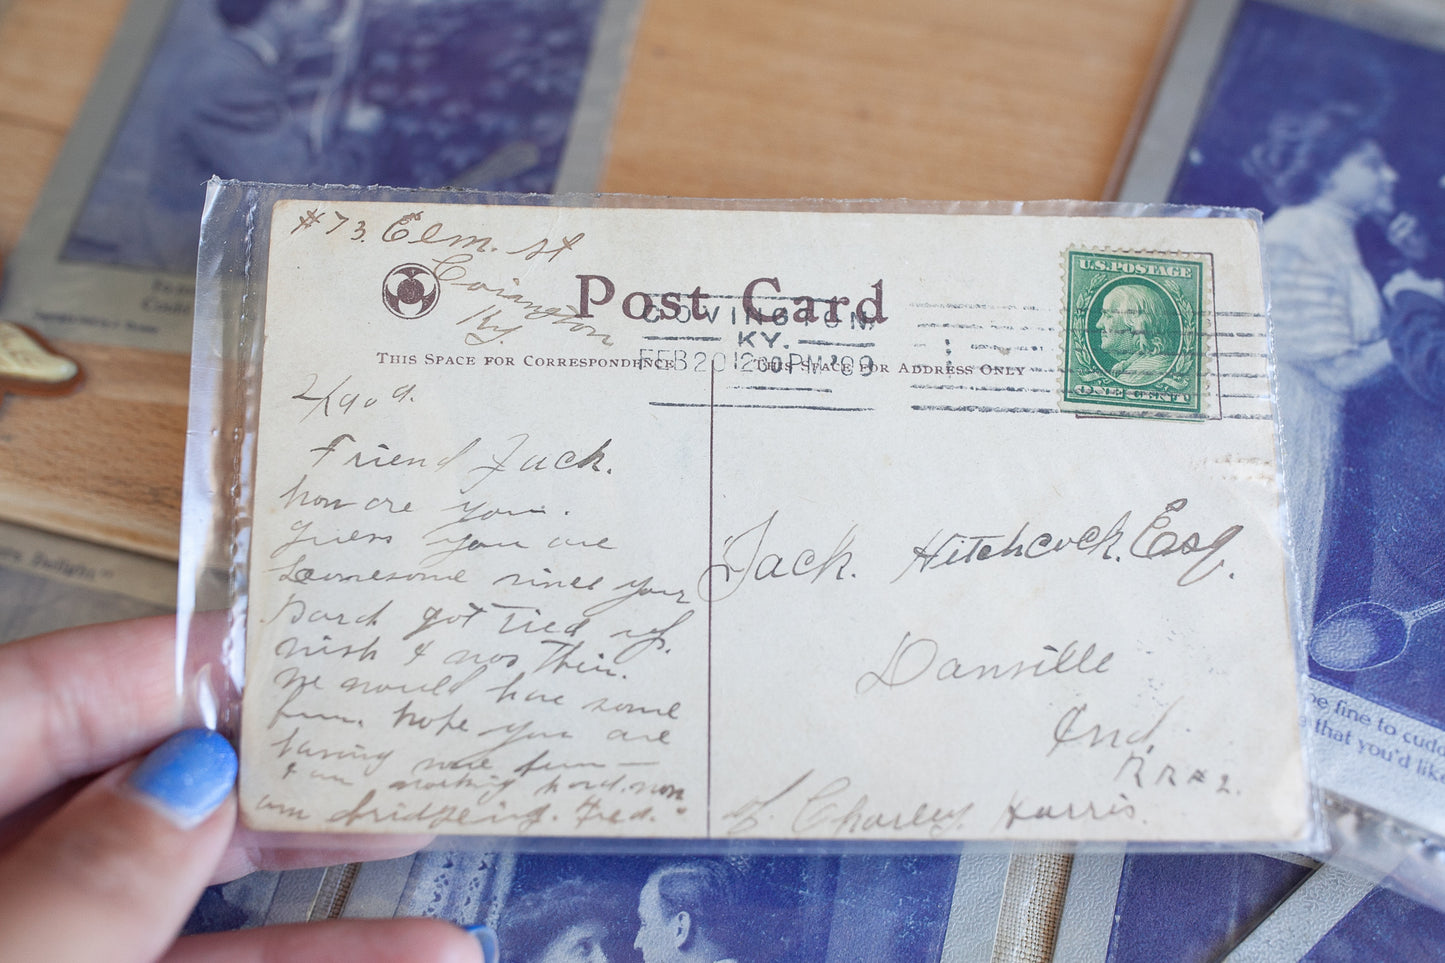 Antique Postcard- Postcards- Ephemera- Spooners Delight